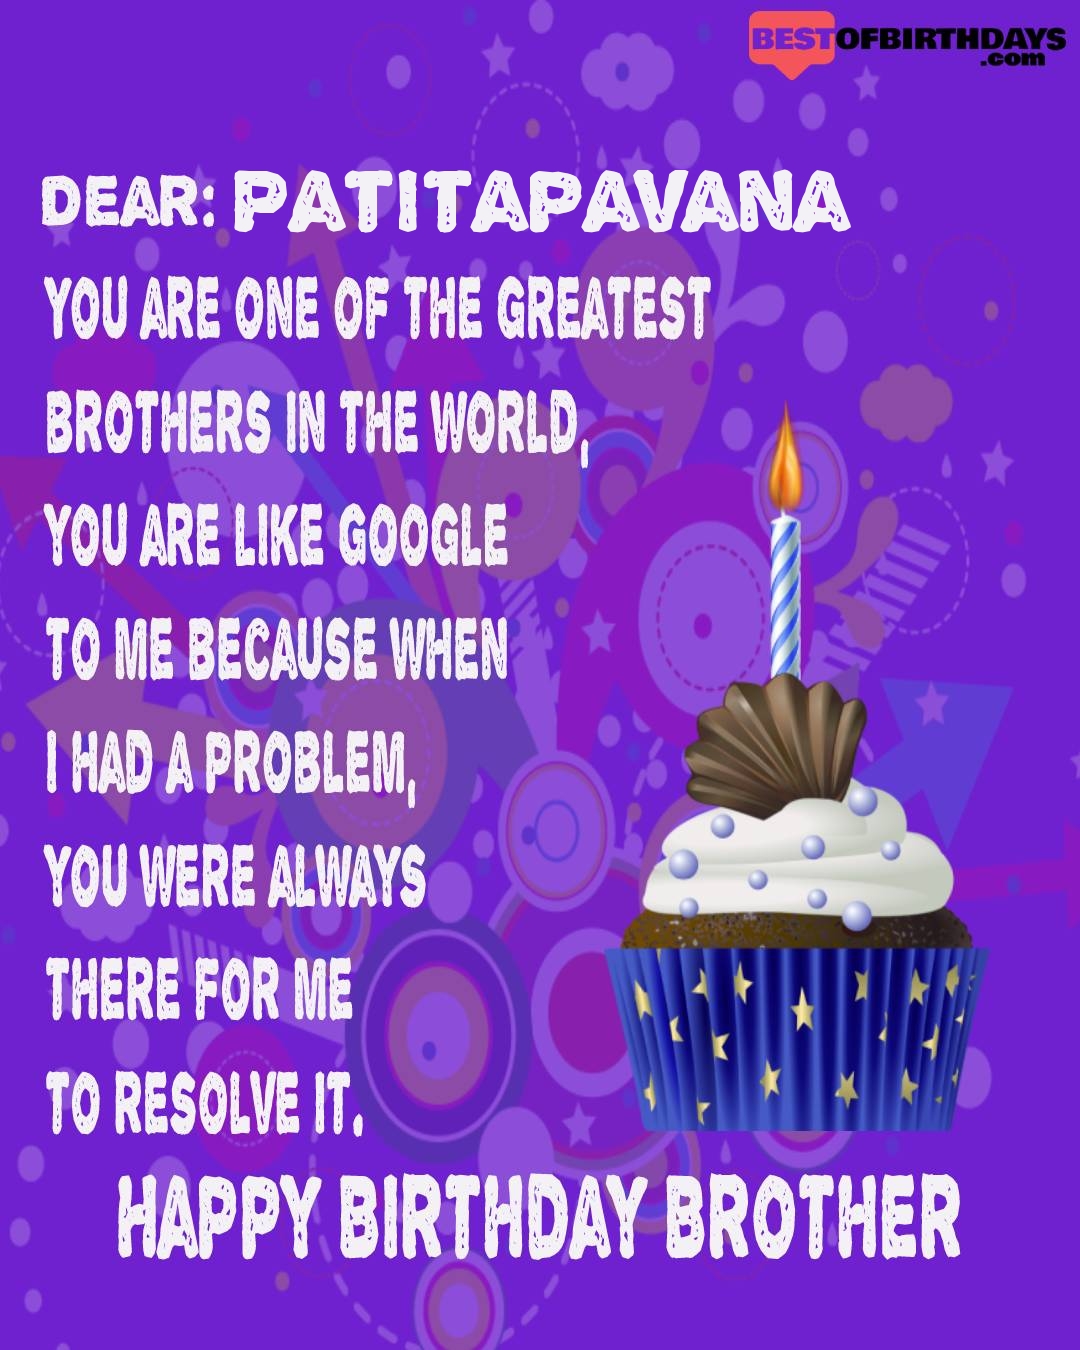 Happy birthday patitapavana bhai brother bro